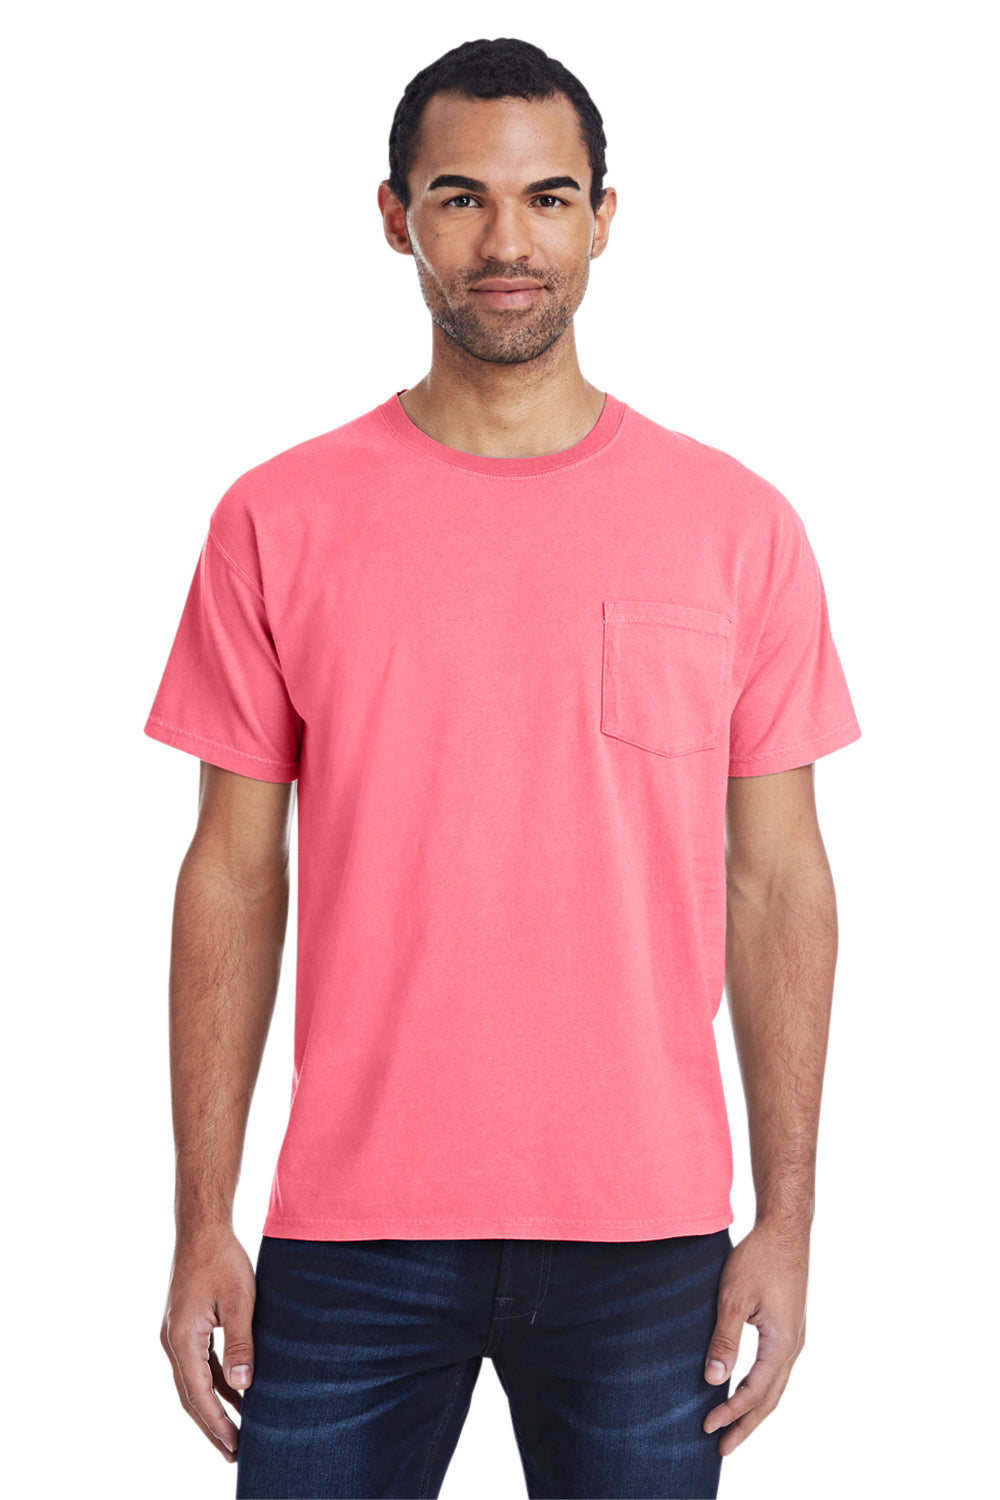 ComfortWash By Hanes GDH150 Mens Short Sleeve Crewneck T-Shirt w/ Pocket Coral Pink Front